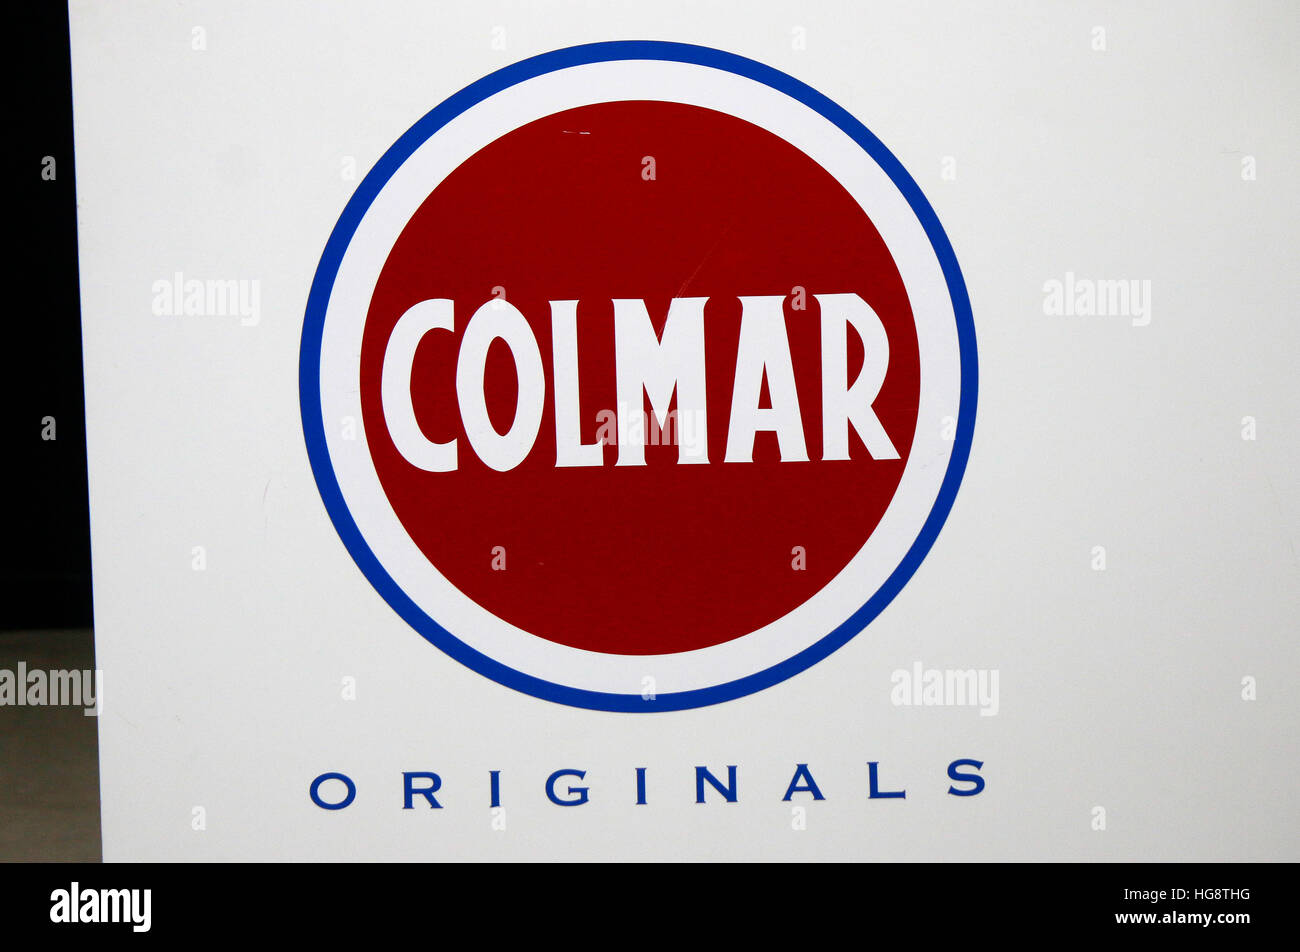 Das Logo der Marke "Colmar", Berlin. Stockfoto